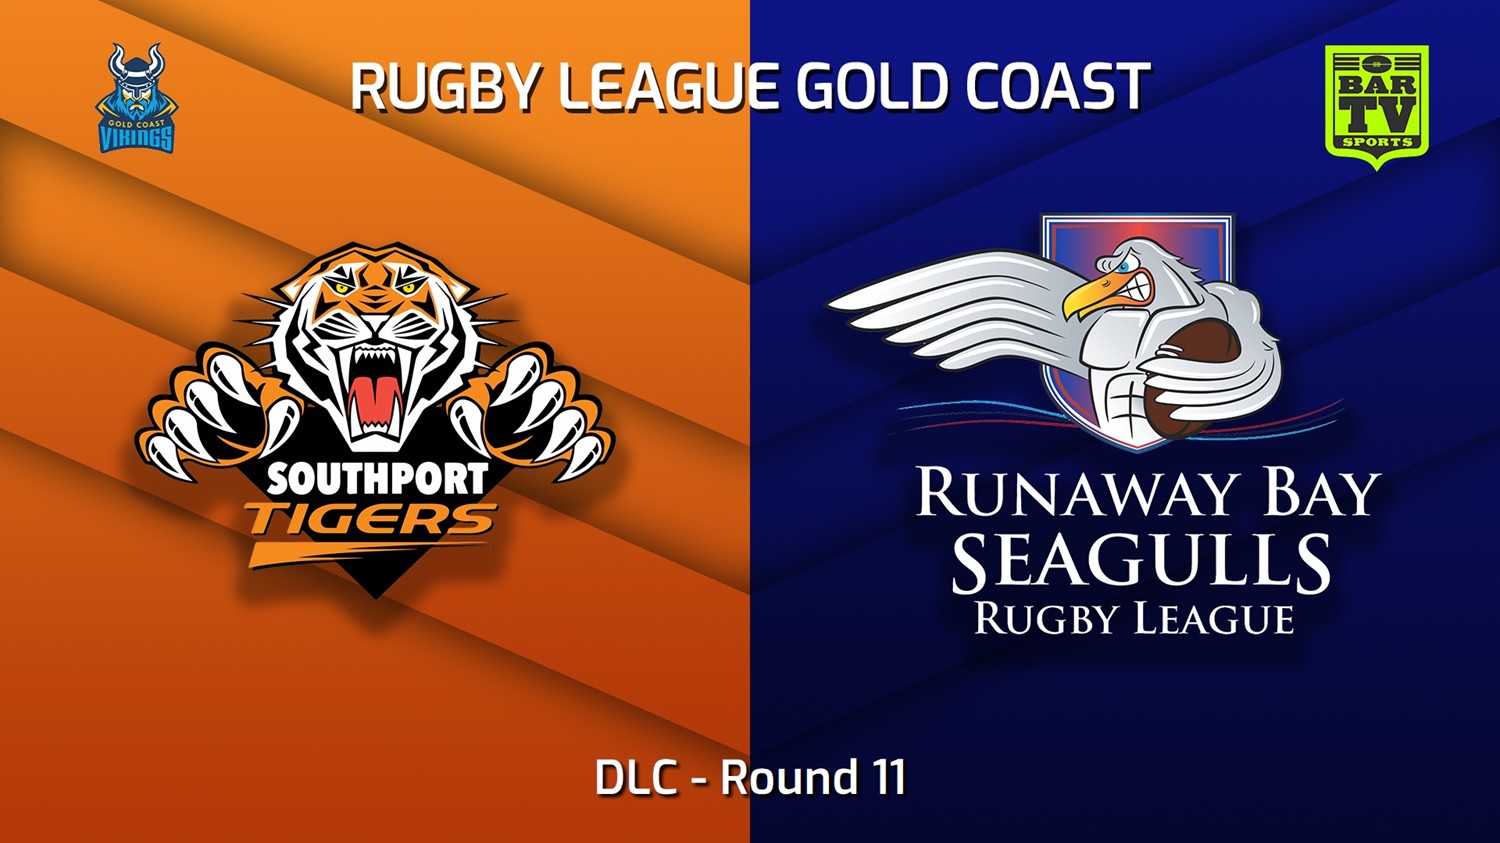 220619-Gold Coast Round 11 - DLC - Southport Tigers v Runaway Bay Seagulls Slate Image